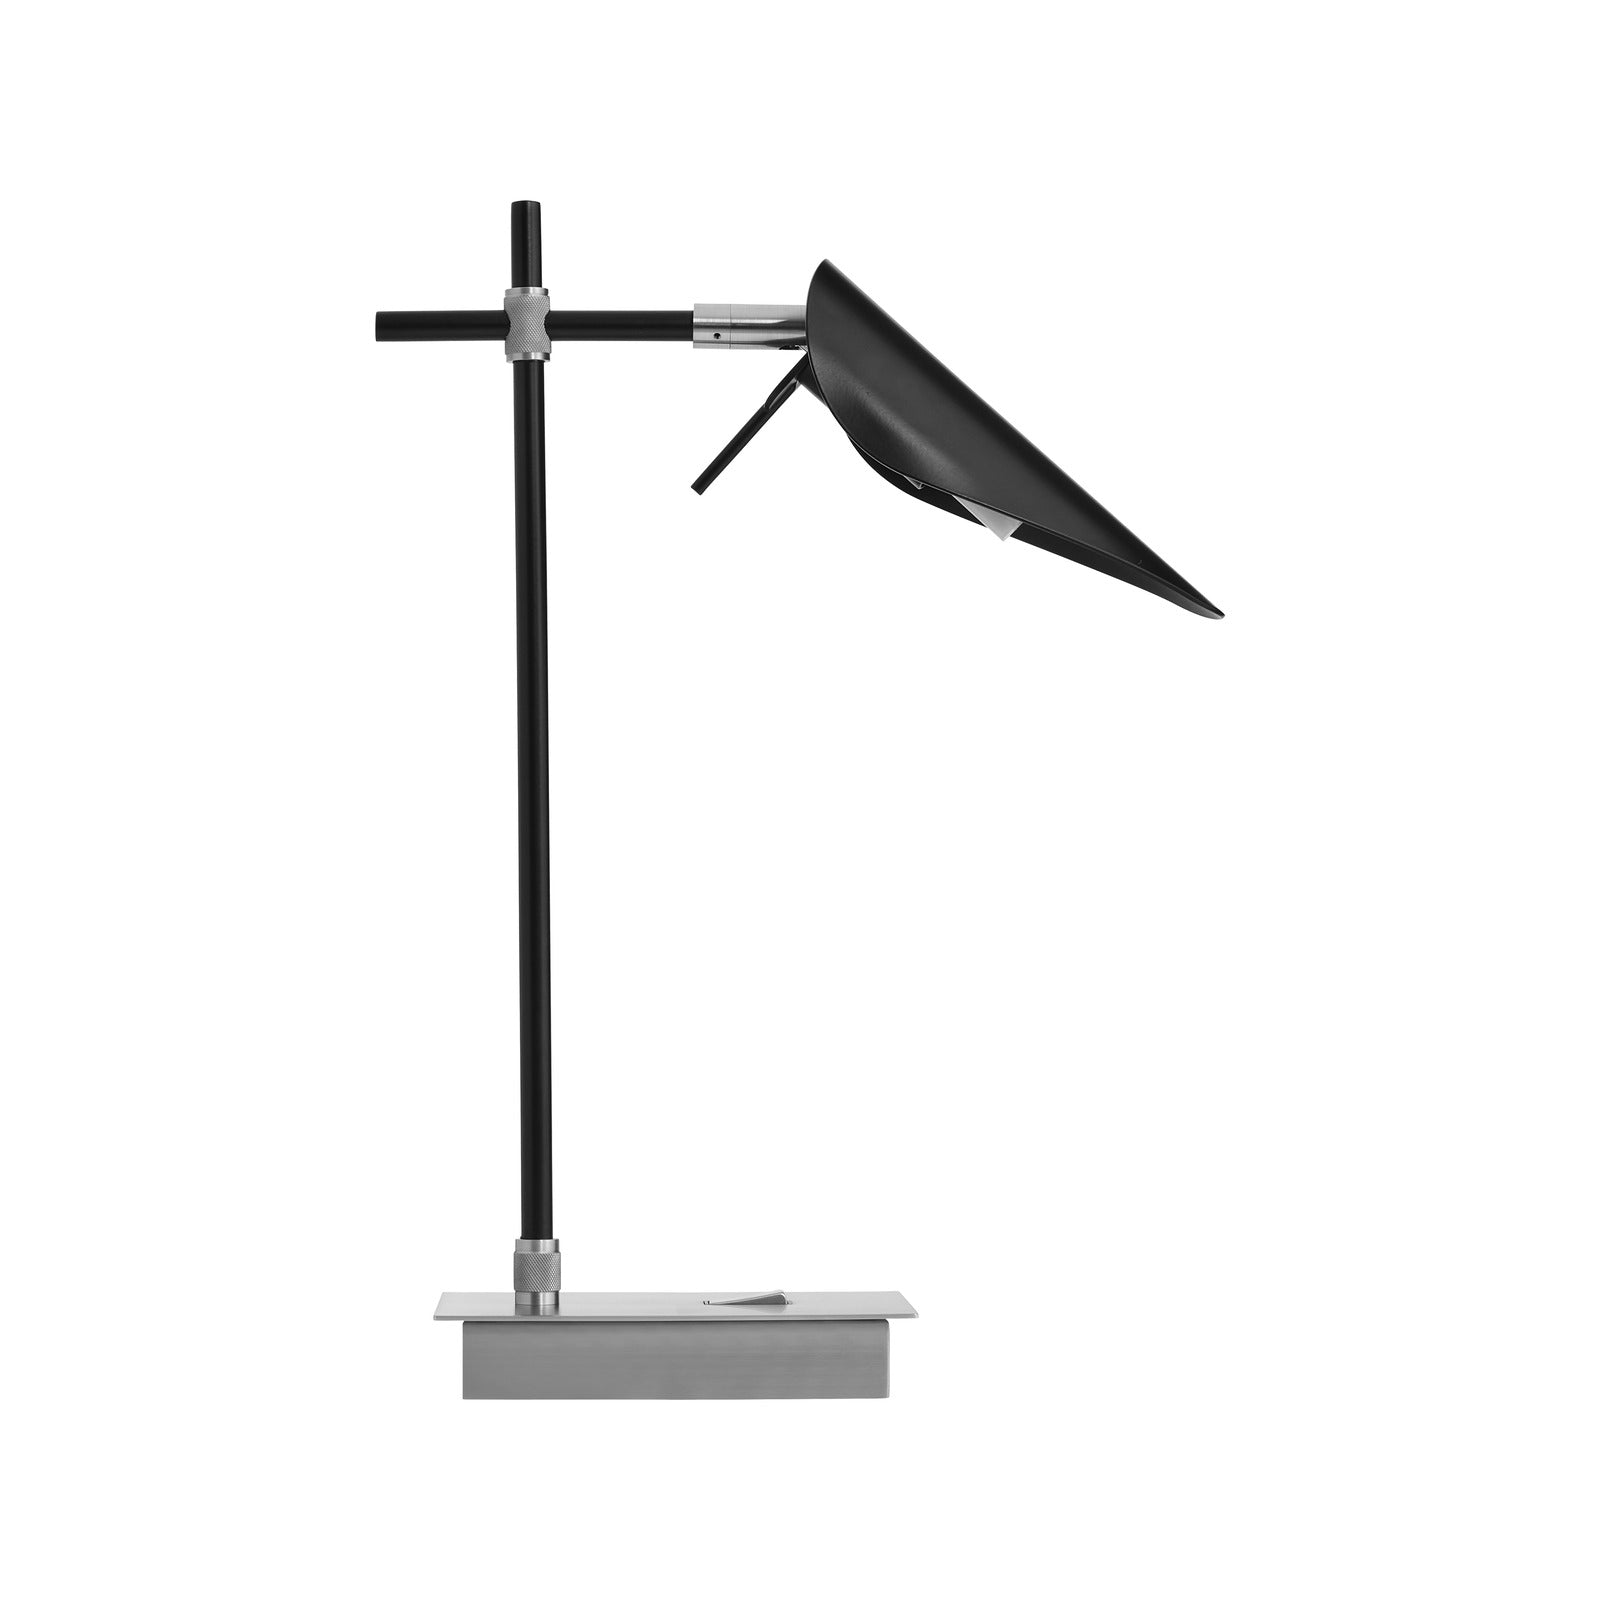 Axl Table Lamp